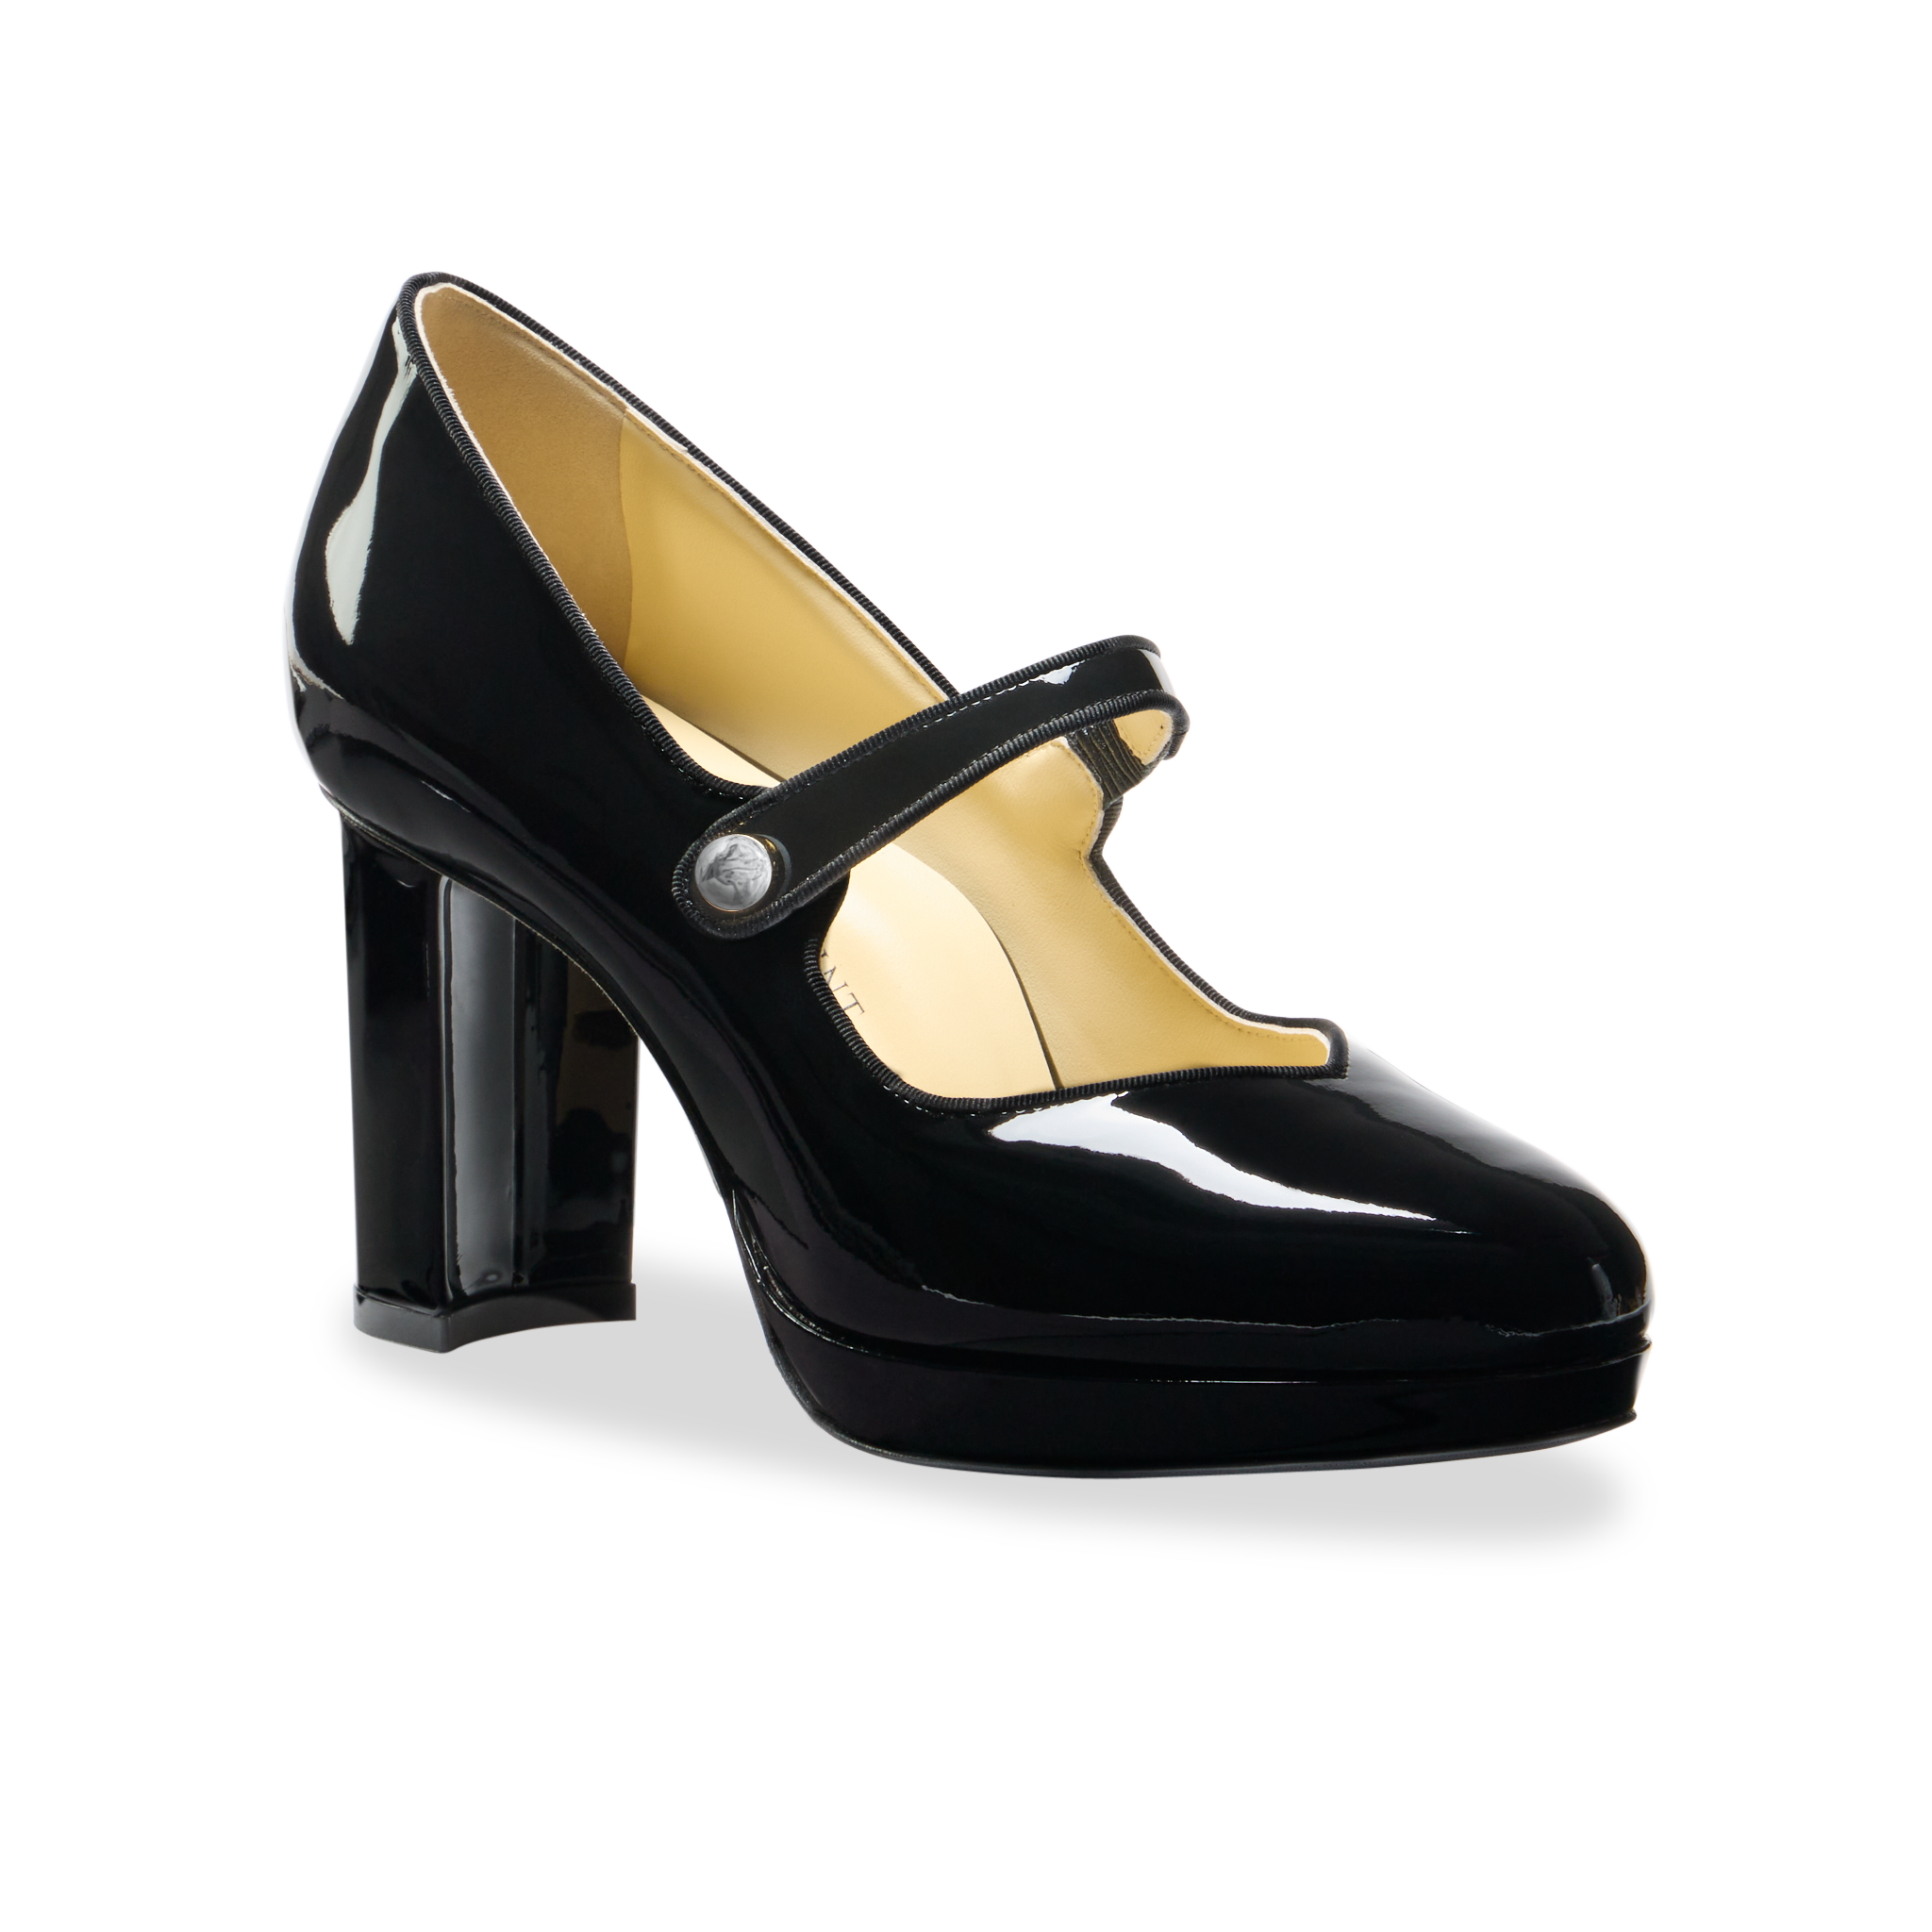 American Duchess Czechia: Millie Women's 1920s Mary Jane Shoes (Oxblood)